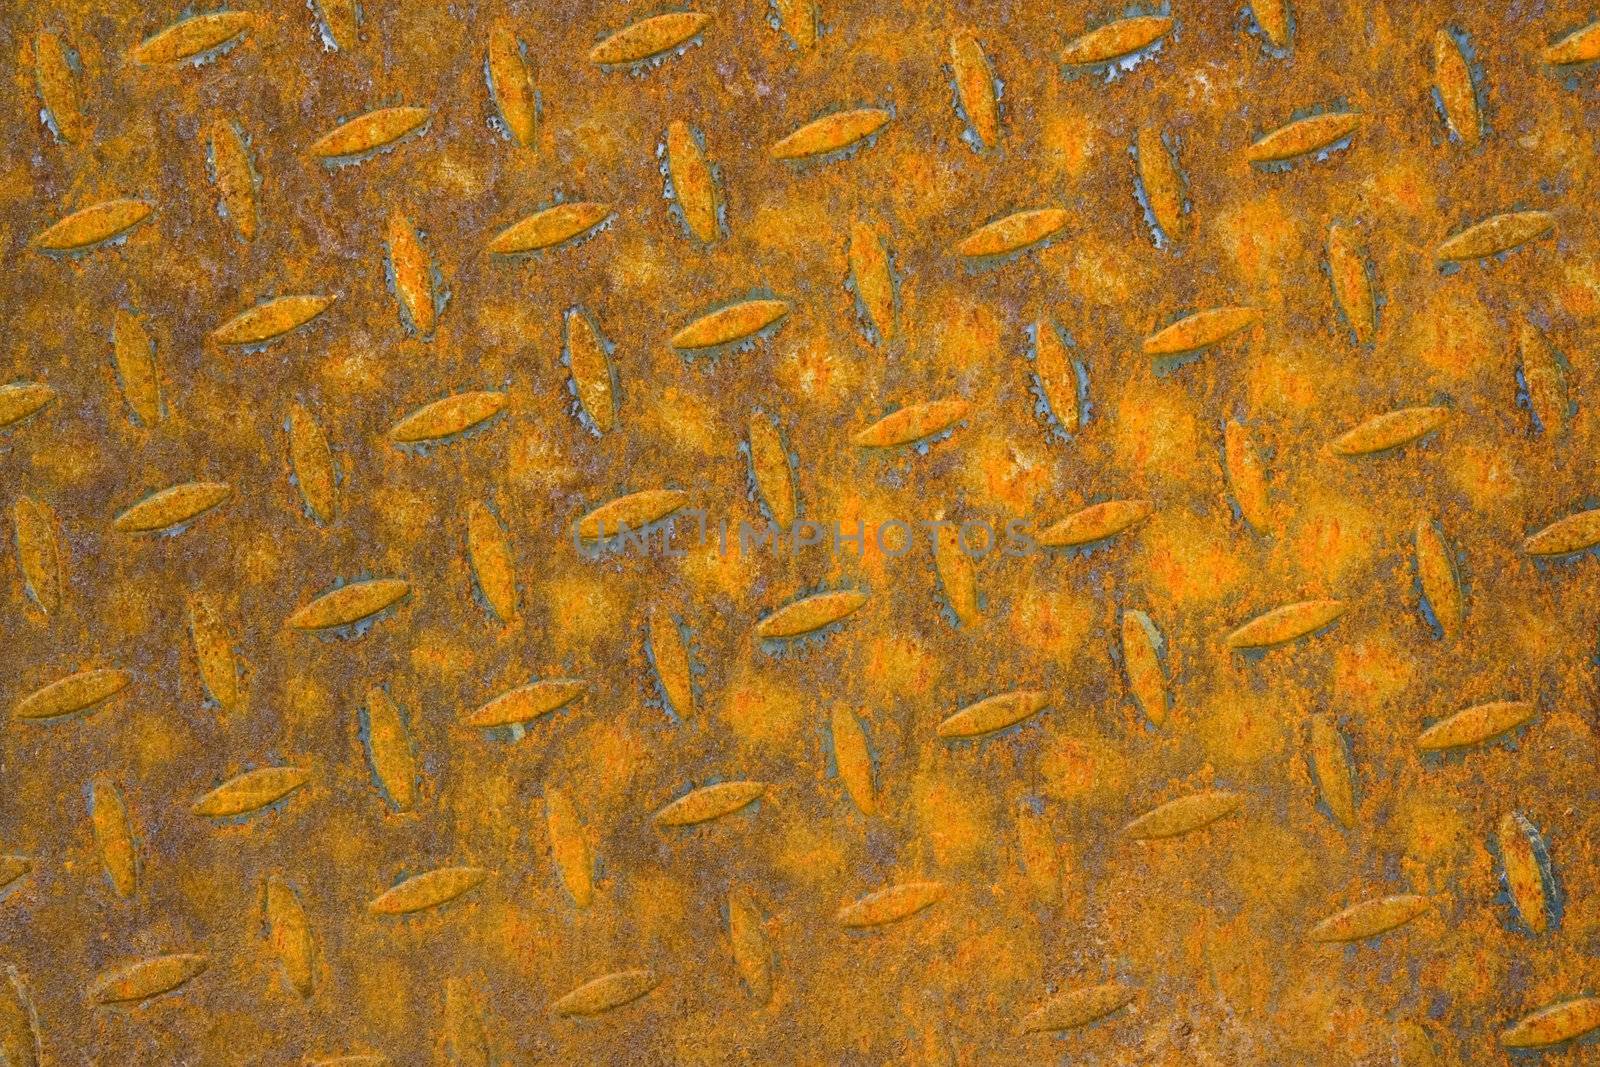 Texture of Rusty Sheet Metal